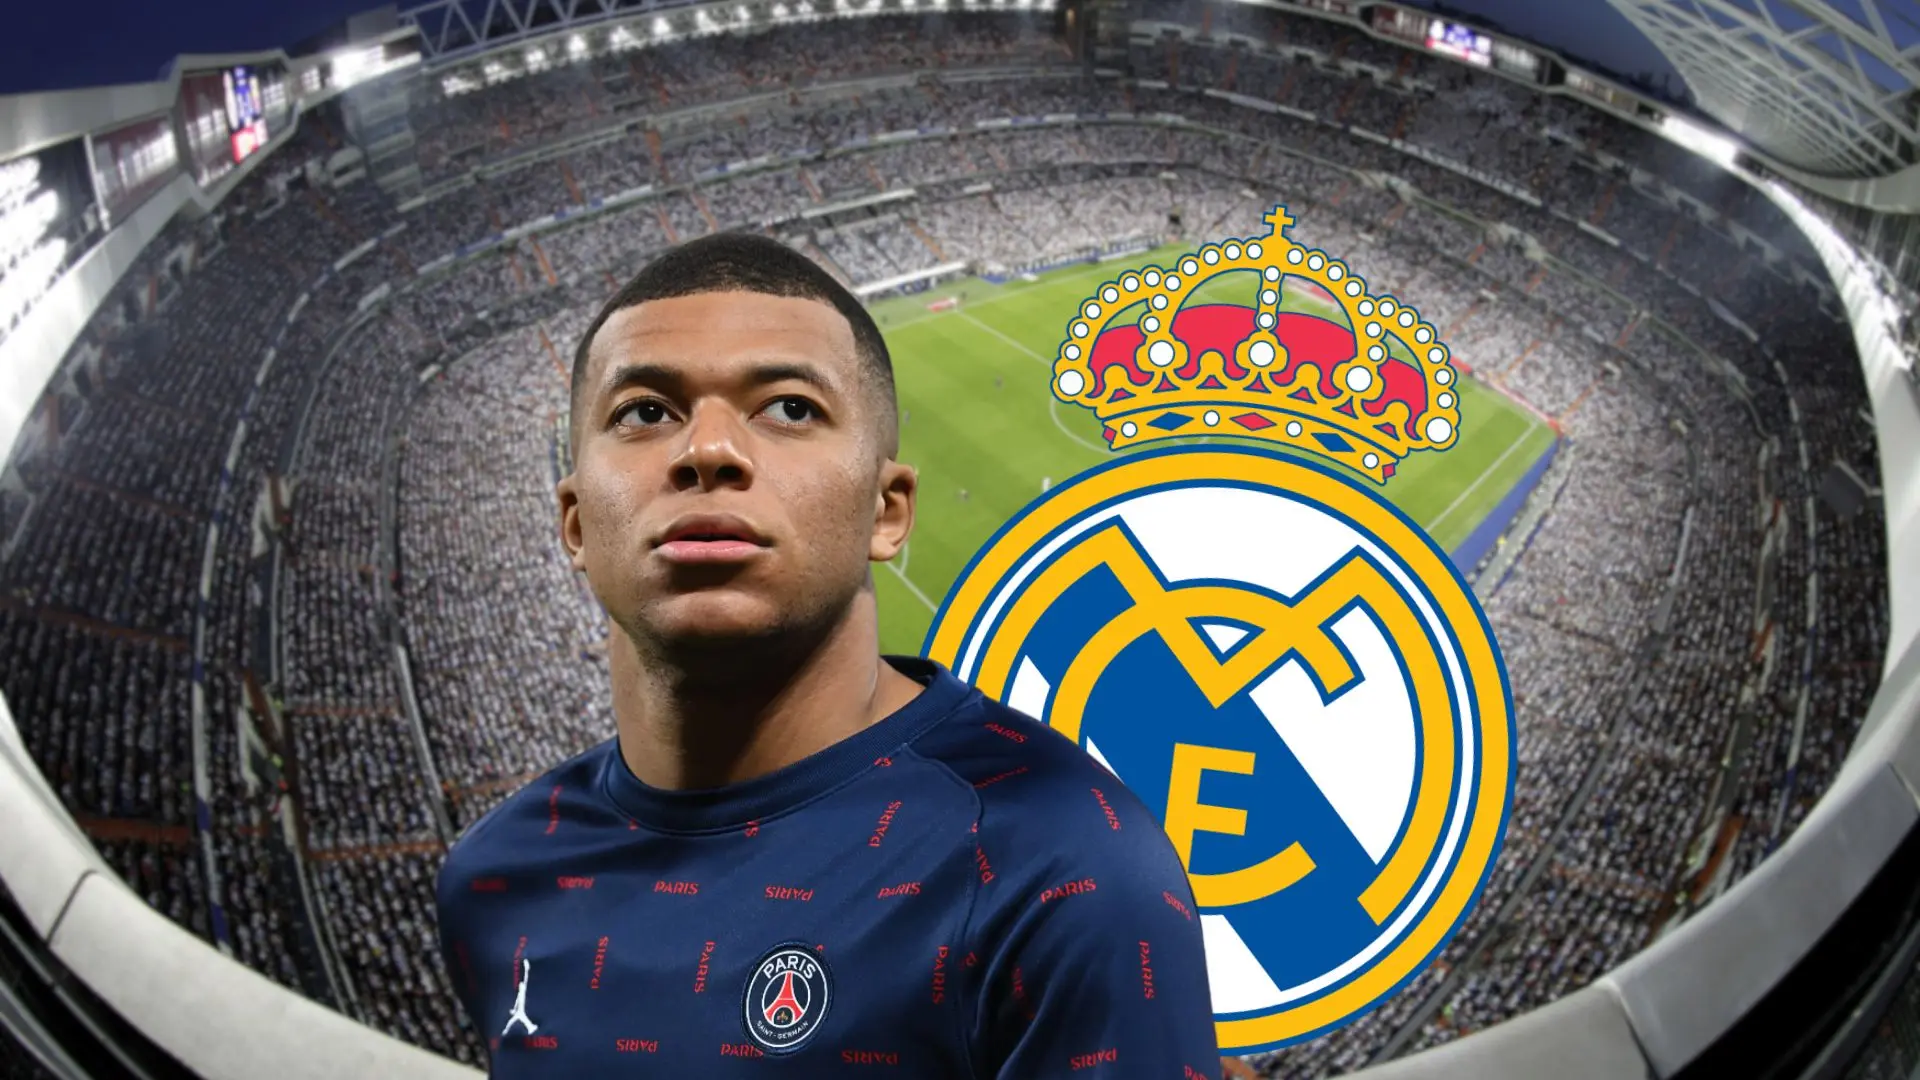 ENCUESTA | ¿Crees que el Real Madrid debería fichar a Mbappé?